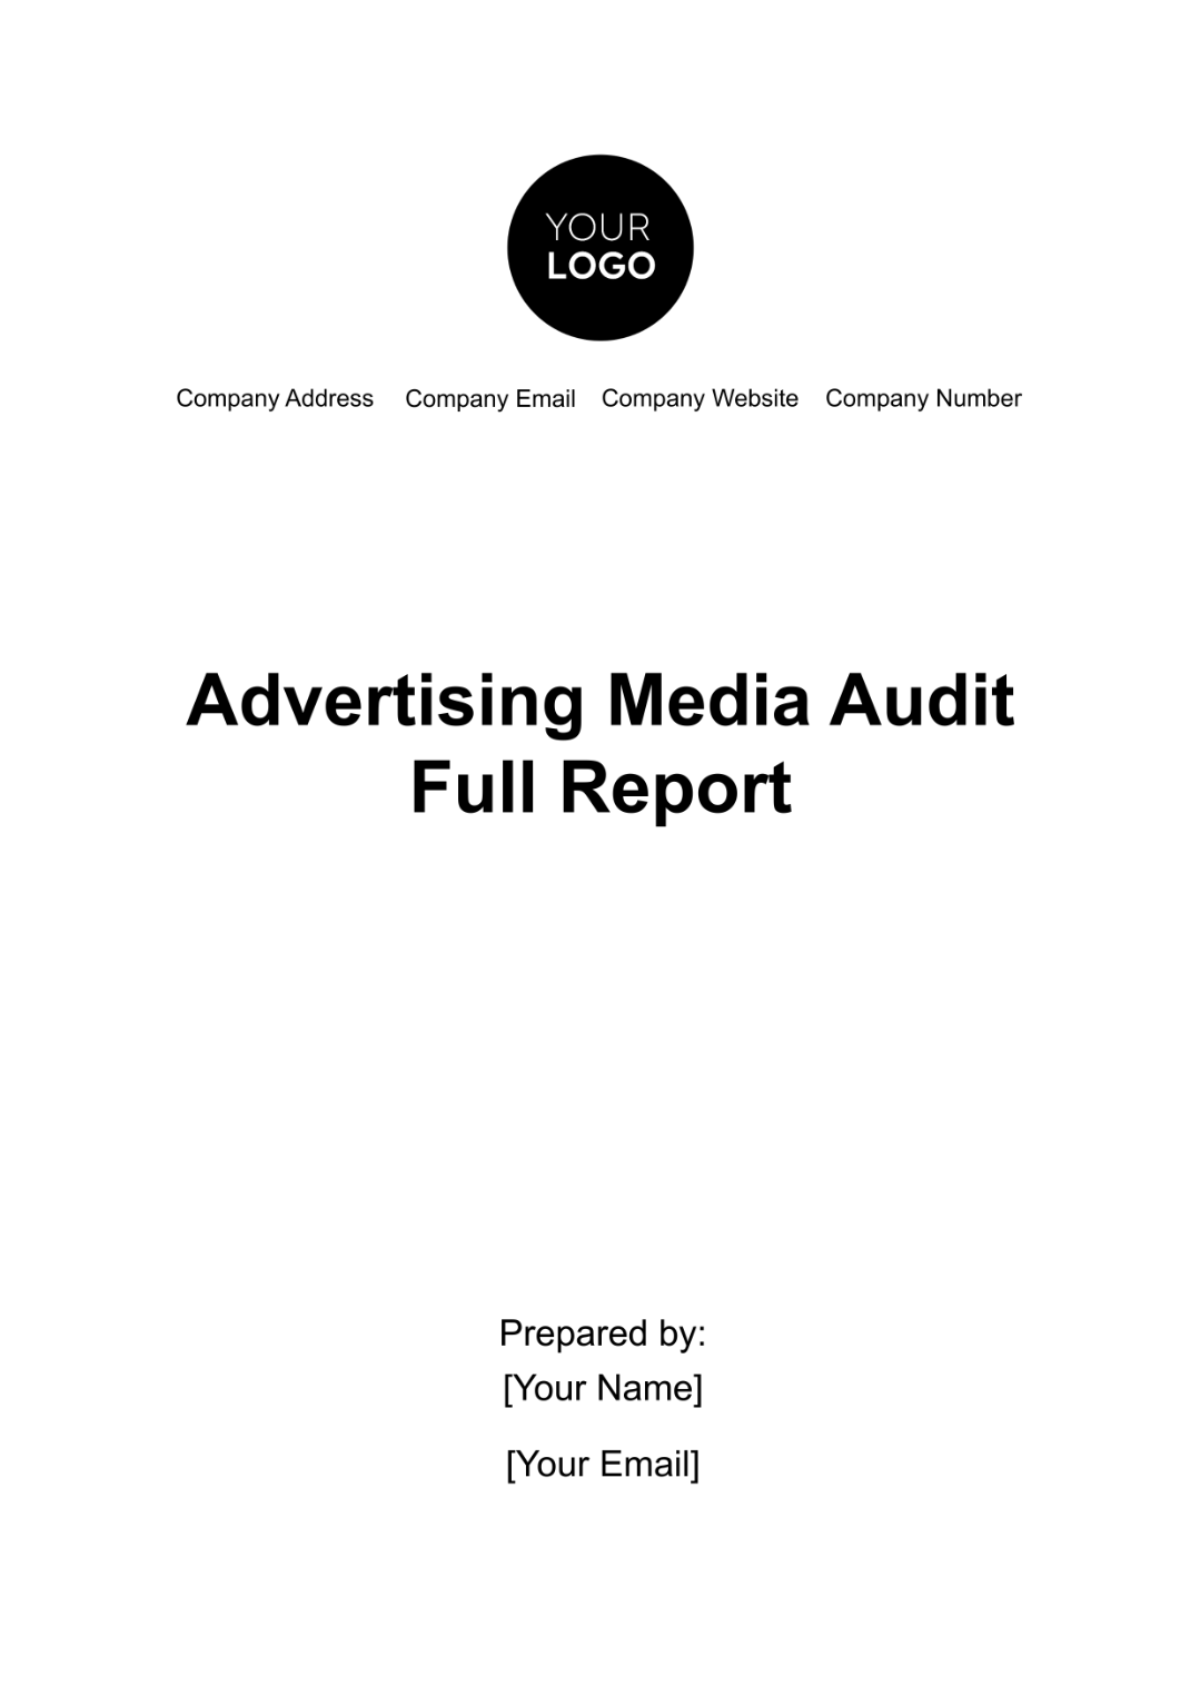 Free Advertising Media Audit Full Report Template